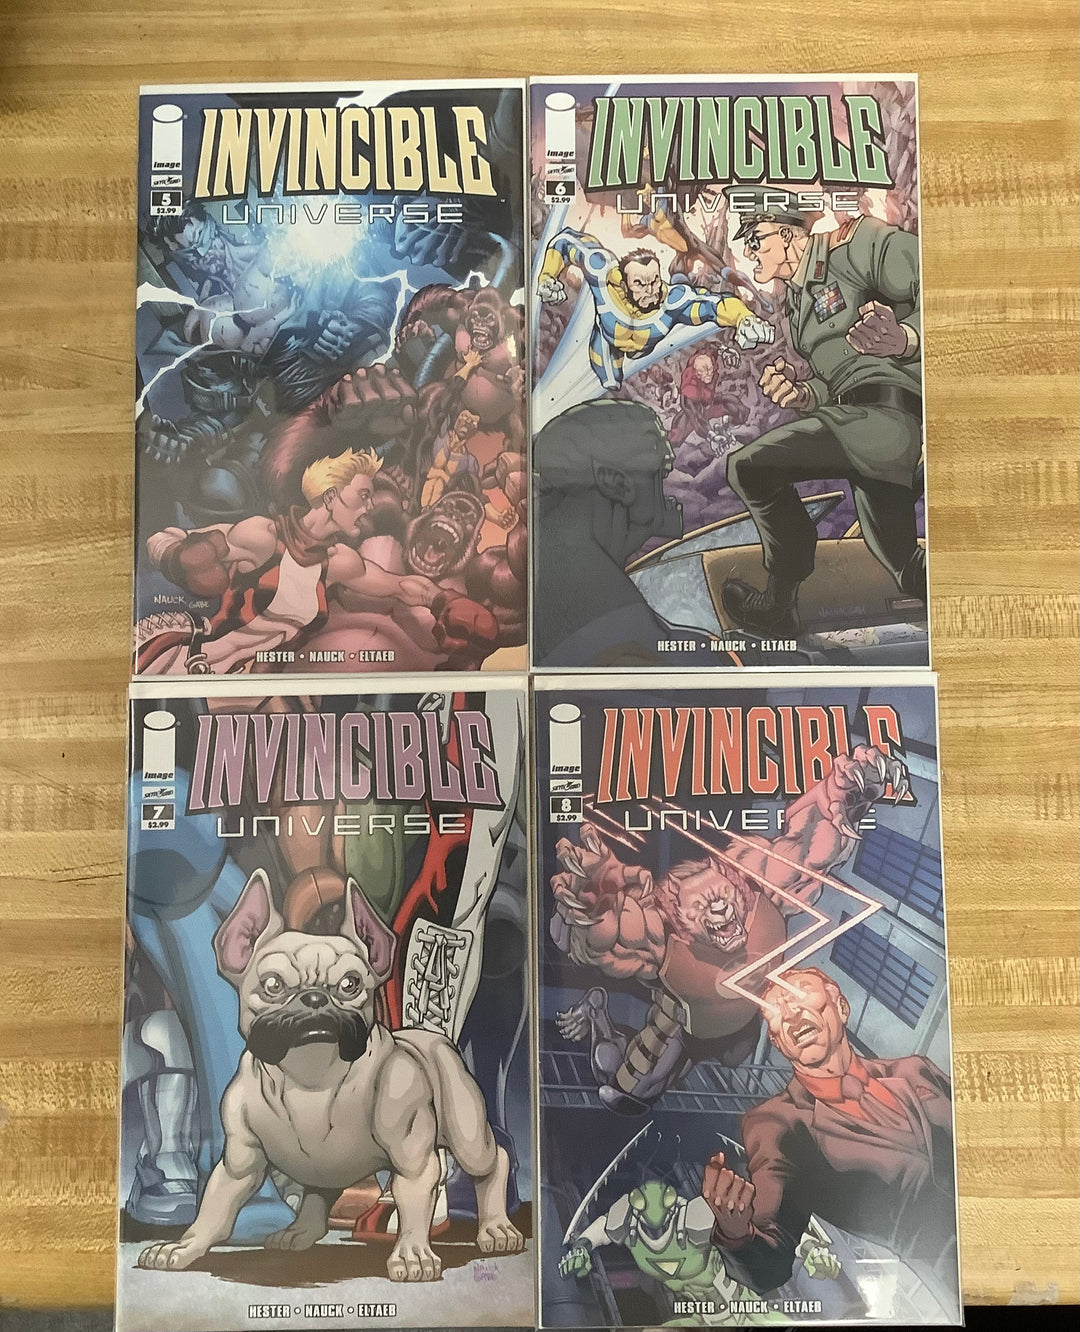 Lot of 12 Invincible Universe Image Comic Books #1-#12 Complete Series Set